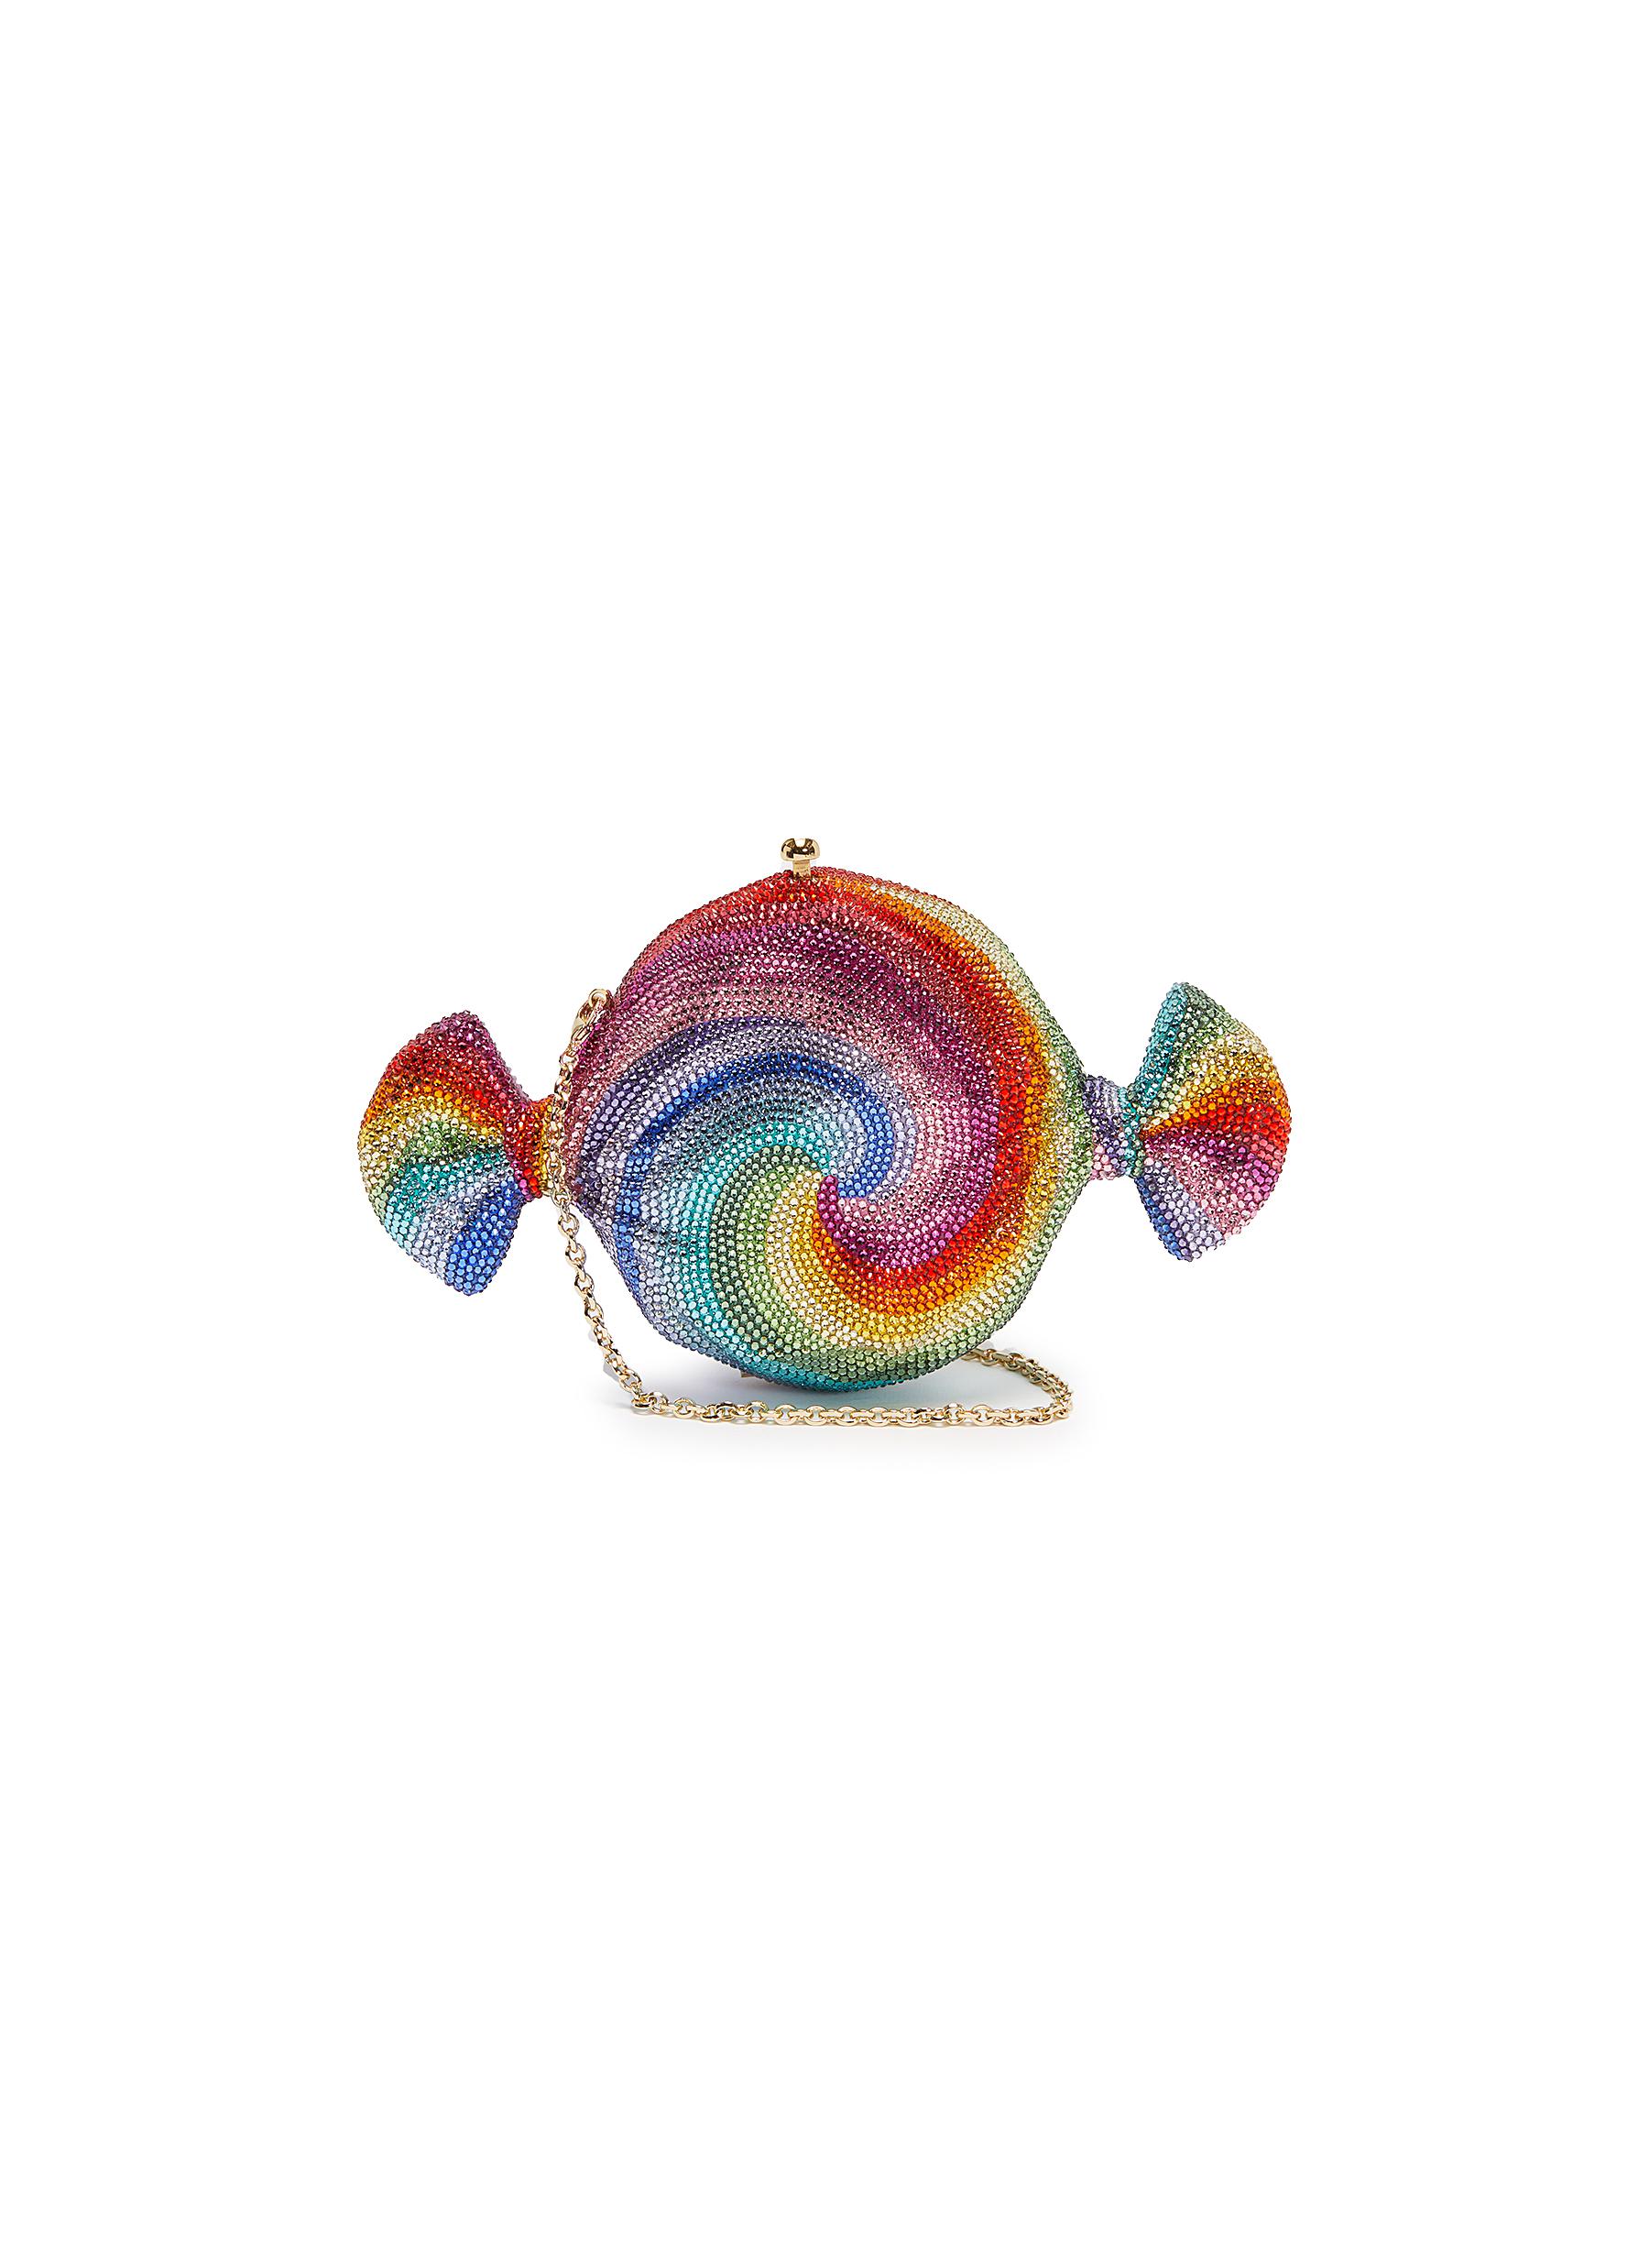 Judith Leiber 'candy Swirl' Crystal Embellished Clutch